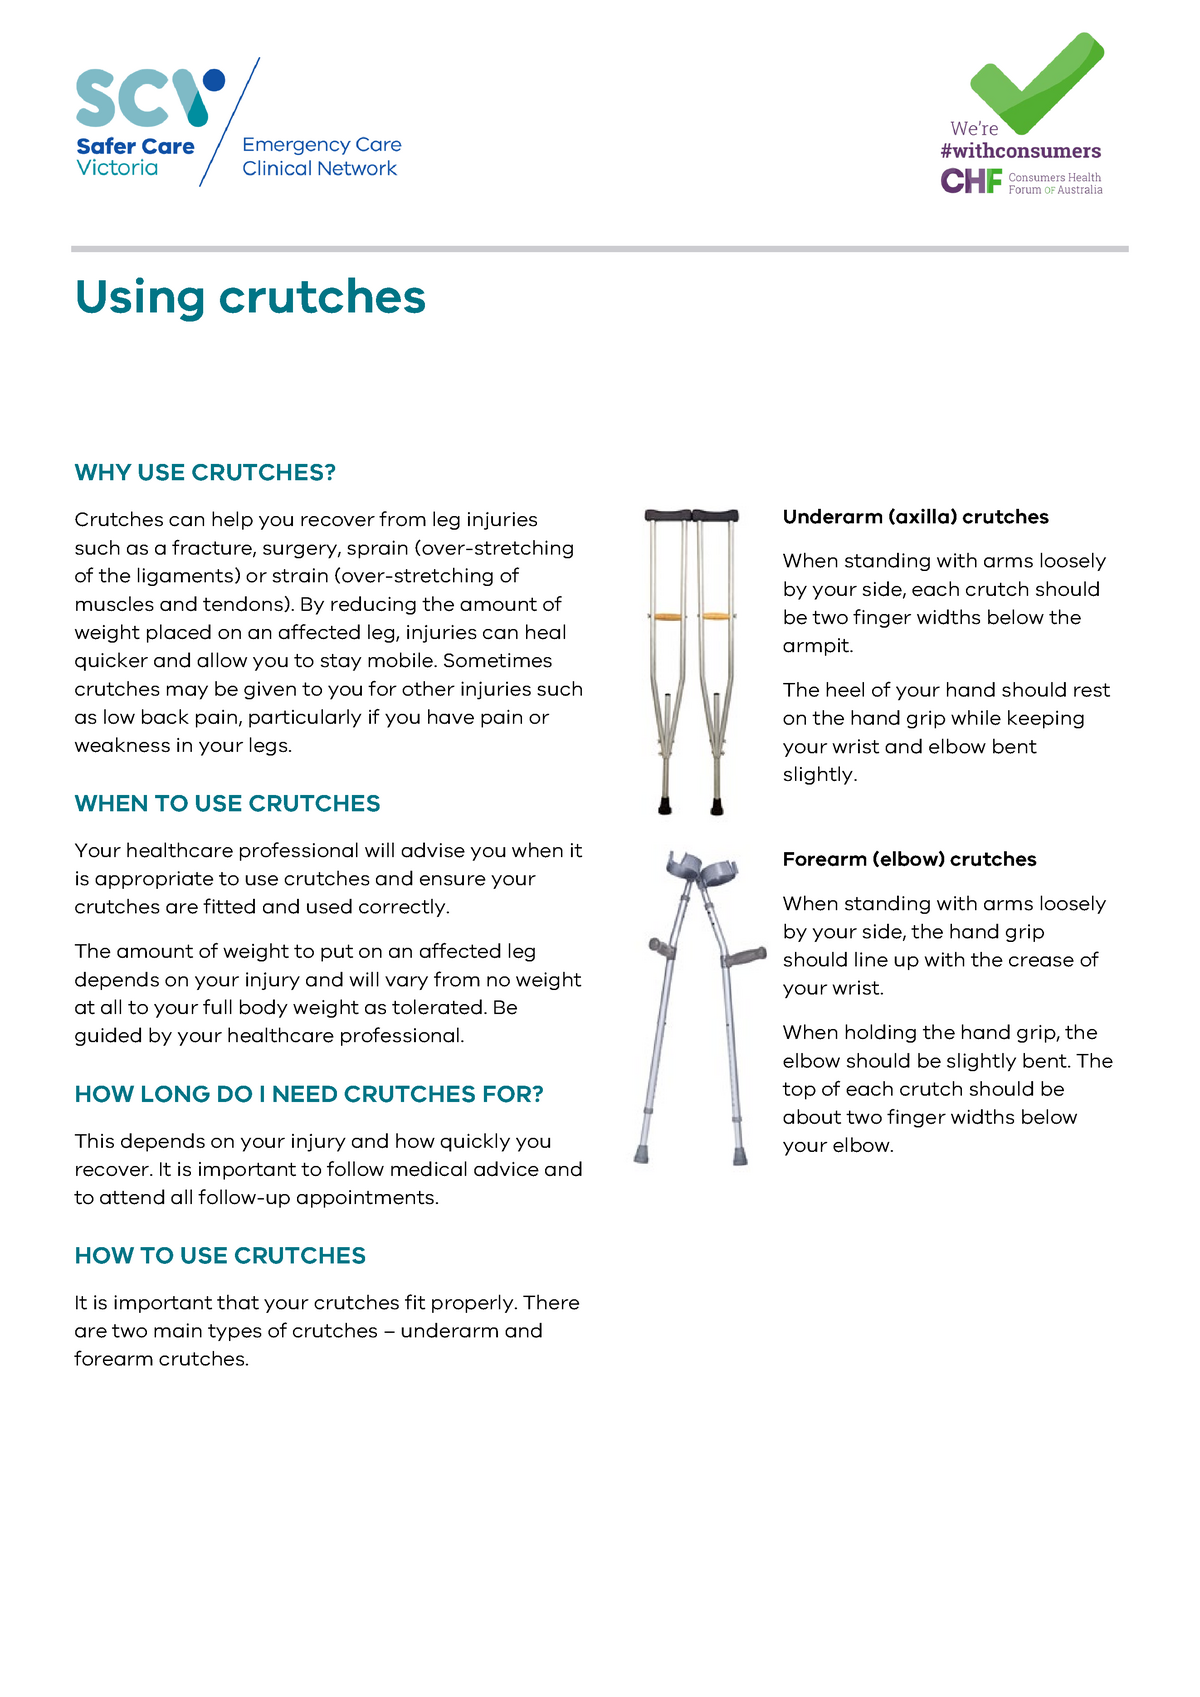 Using crutches fact sheet